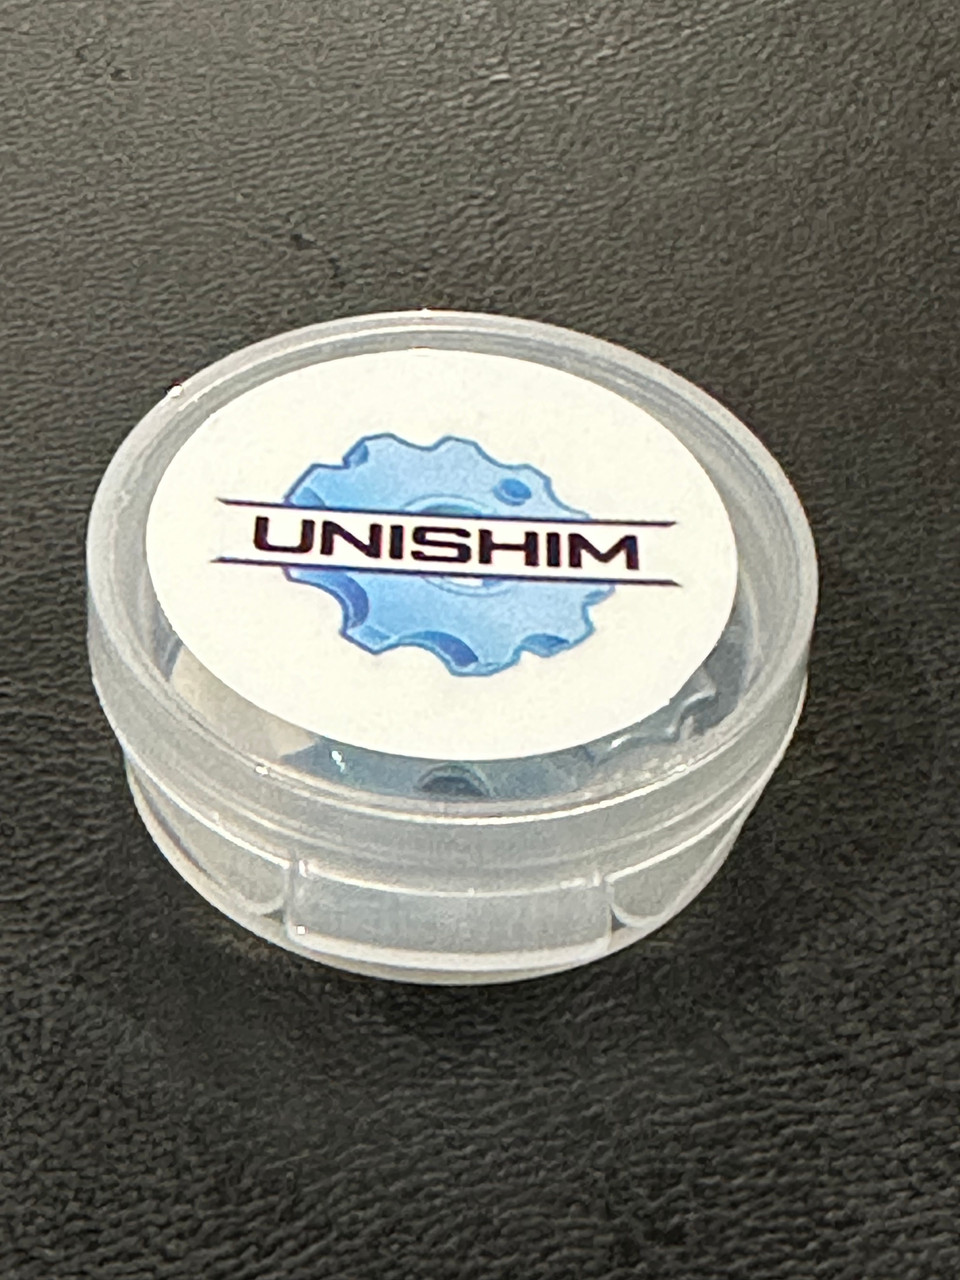 UniShim Electrical Shimming Fastener